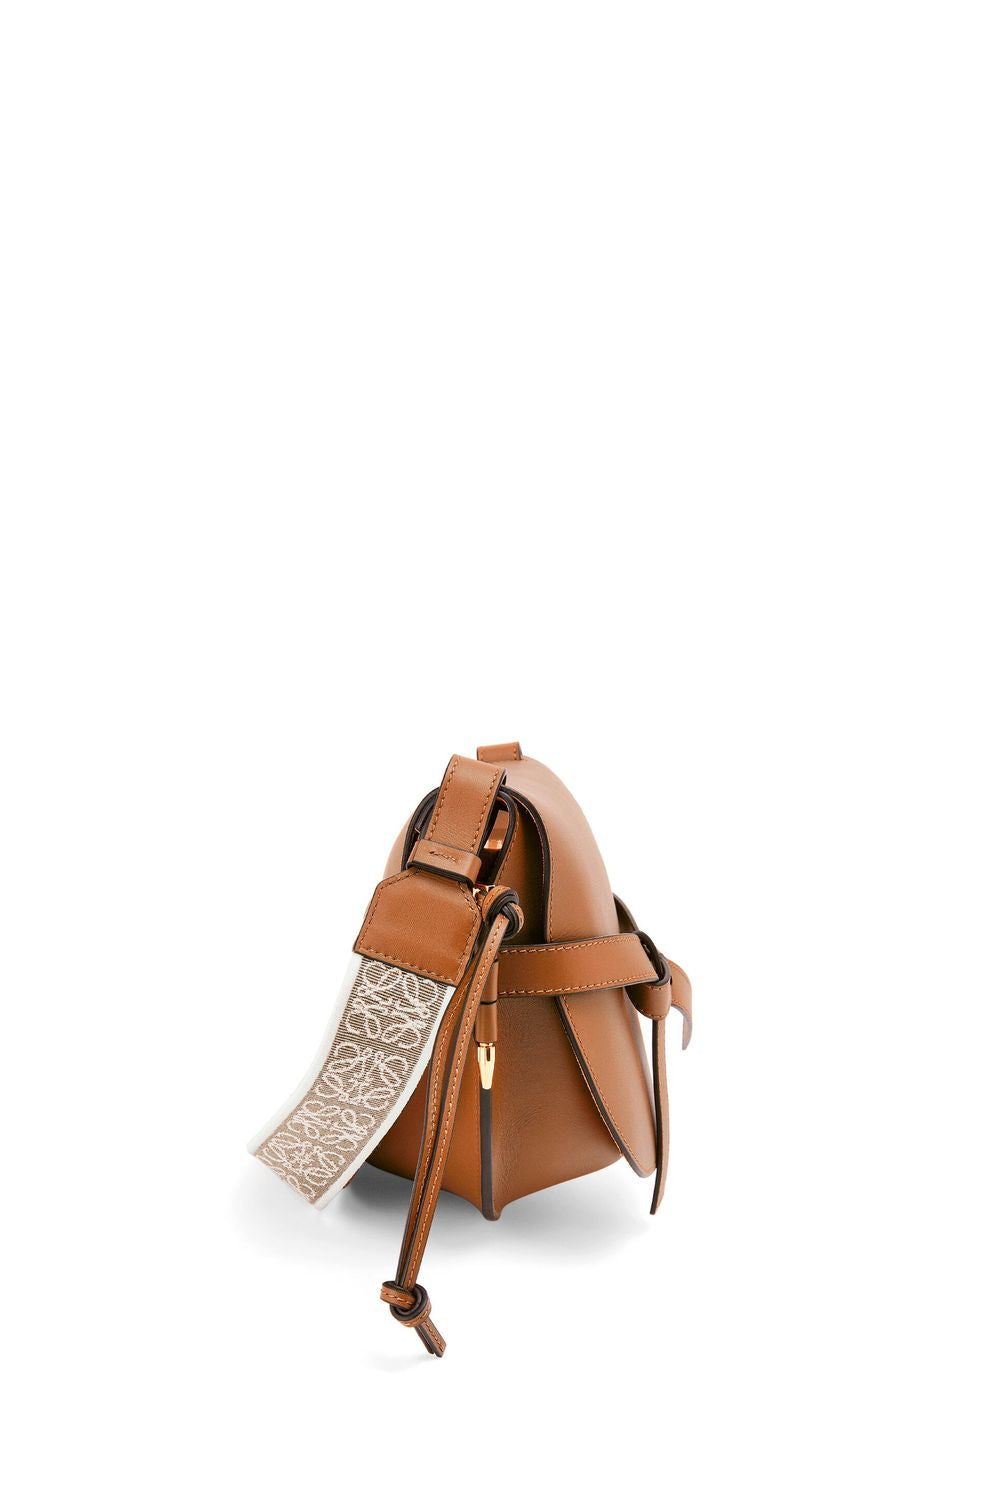 LOEWE Tan Calfskin Mini Gate Crossbody Handbag with Embossed Logo, Adjustable Strap, and Knot Detail - 25x19x11.5 cm